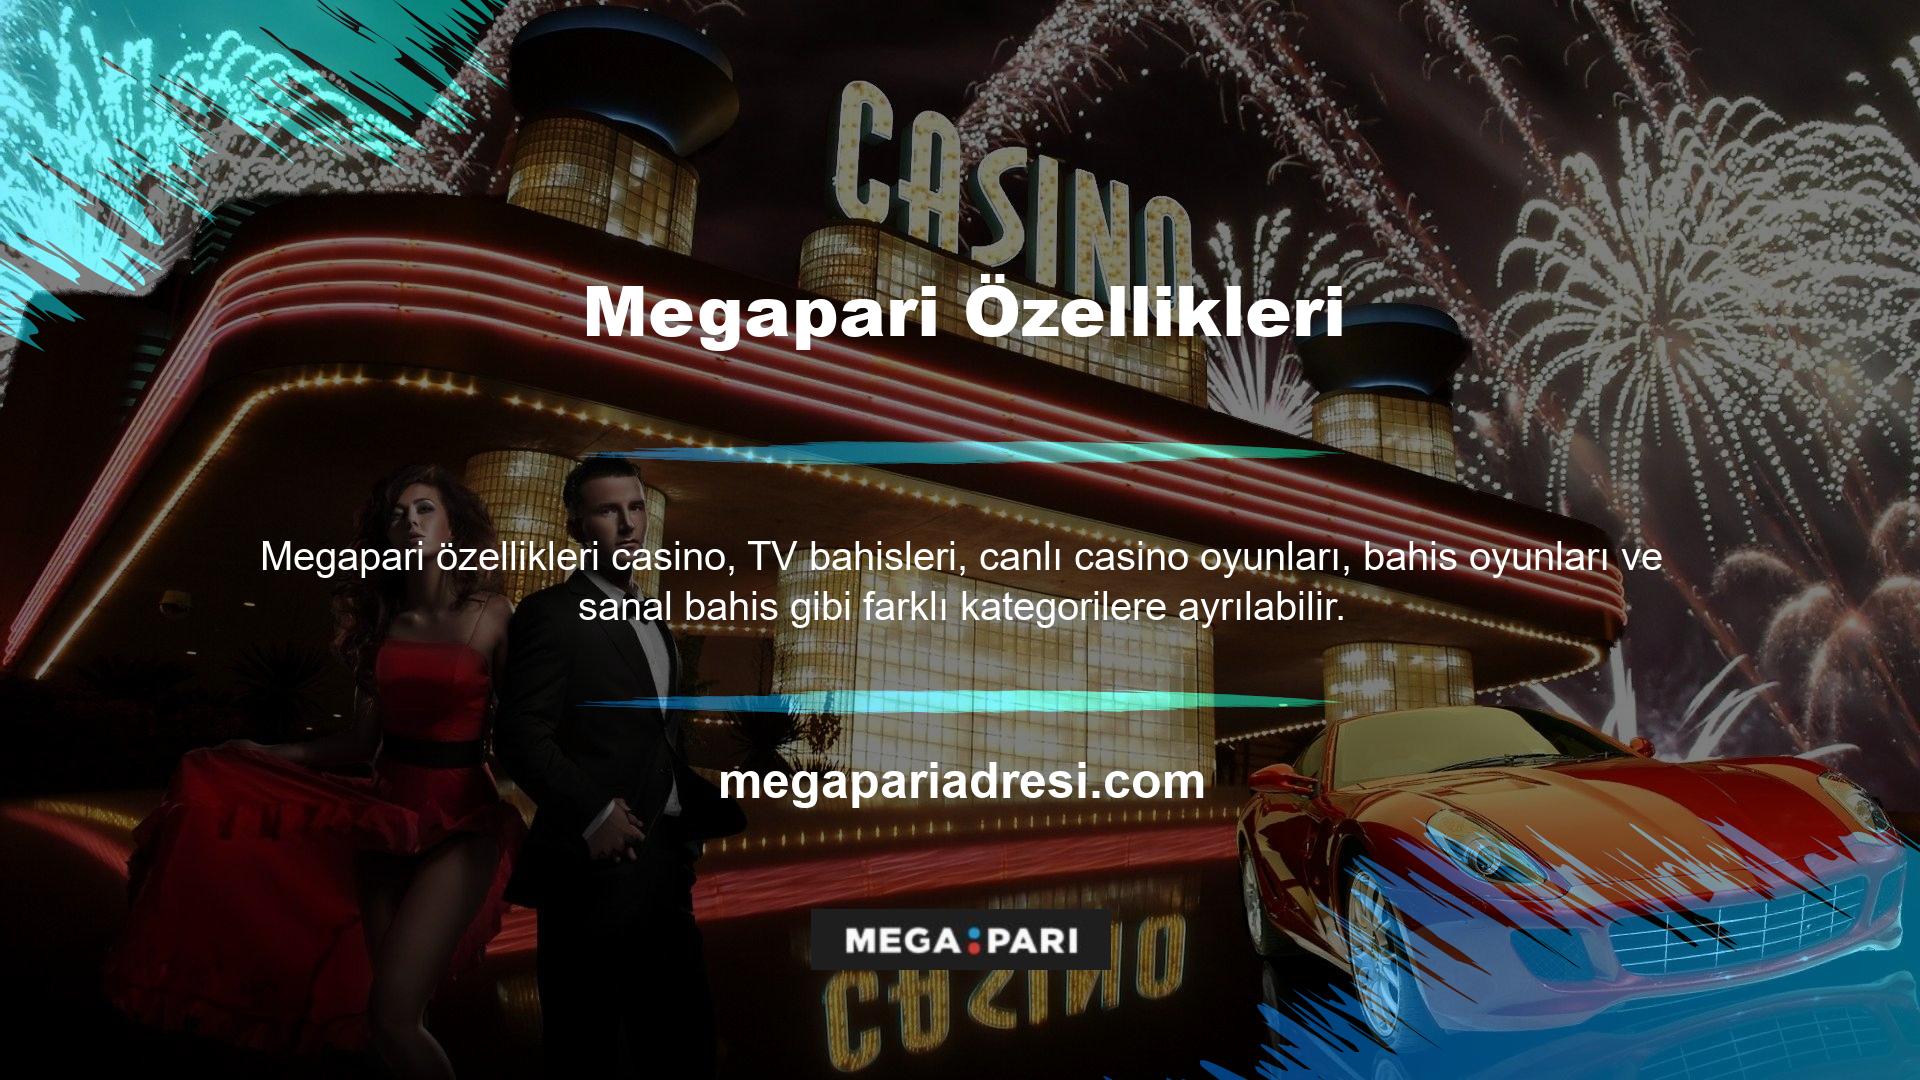 Mevcut Casino sitesi, Megapari